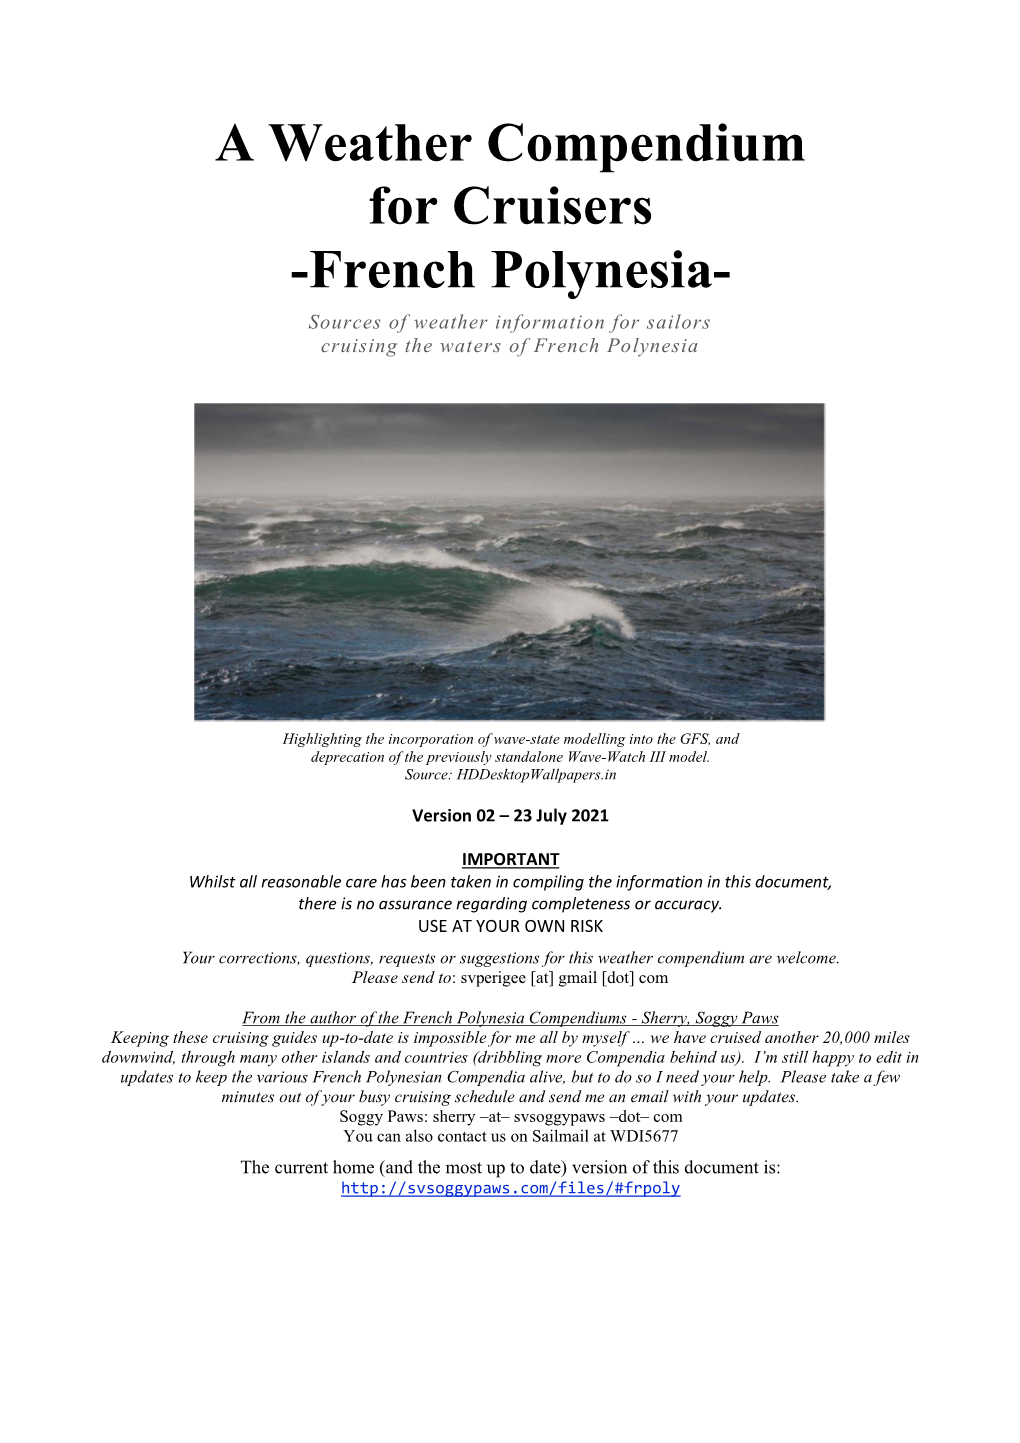 French Polynesia Weather Compendium